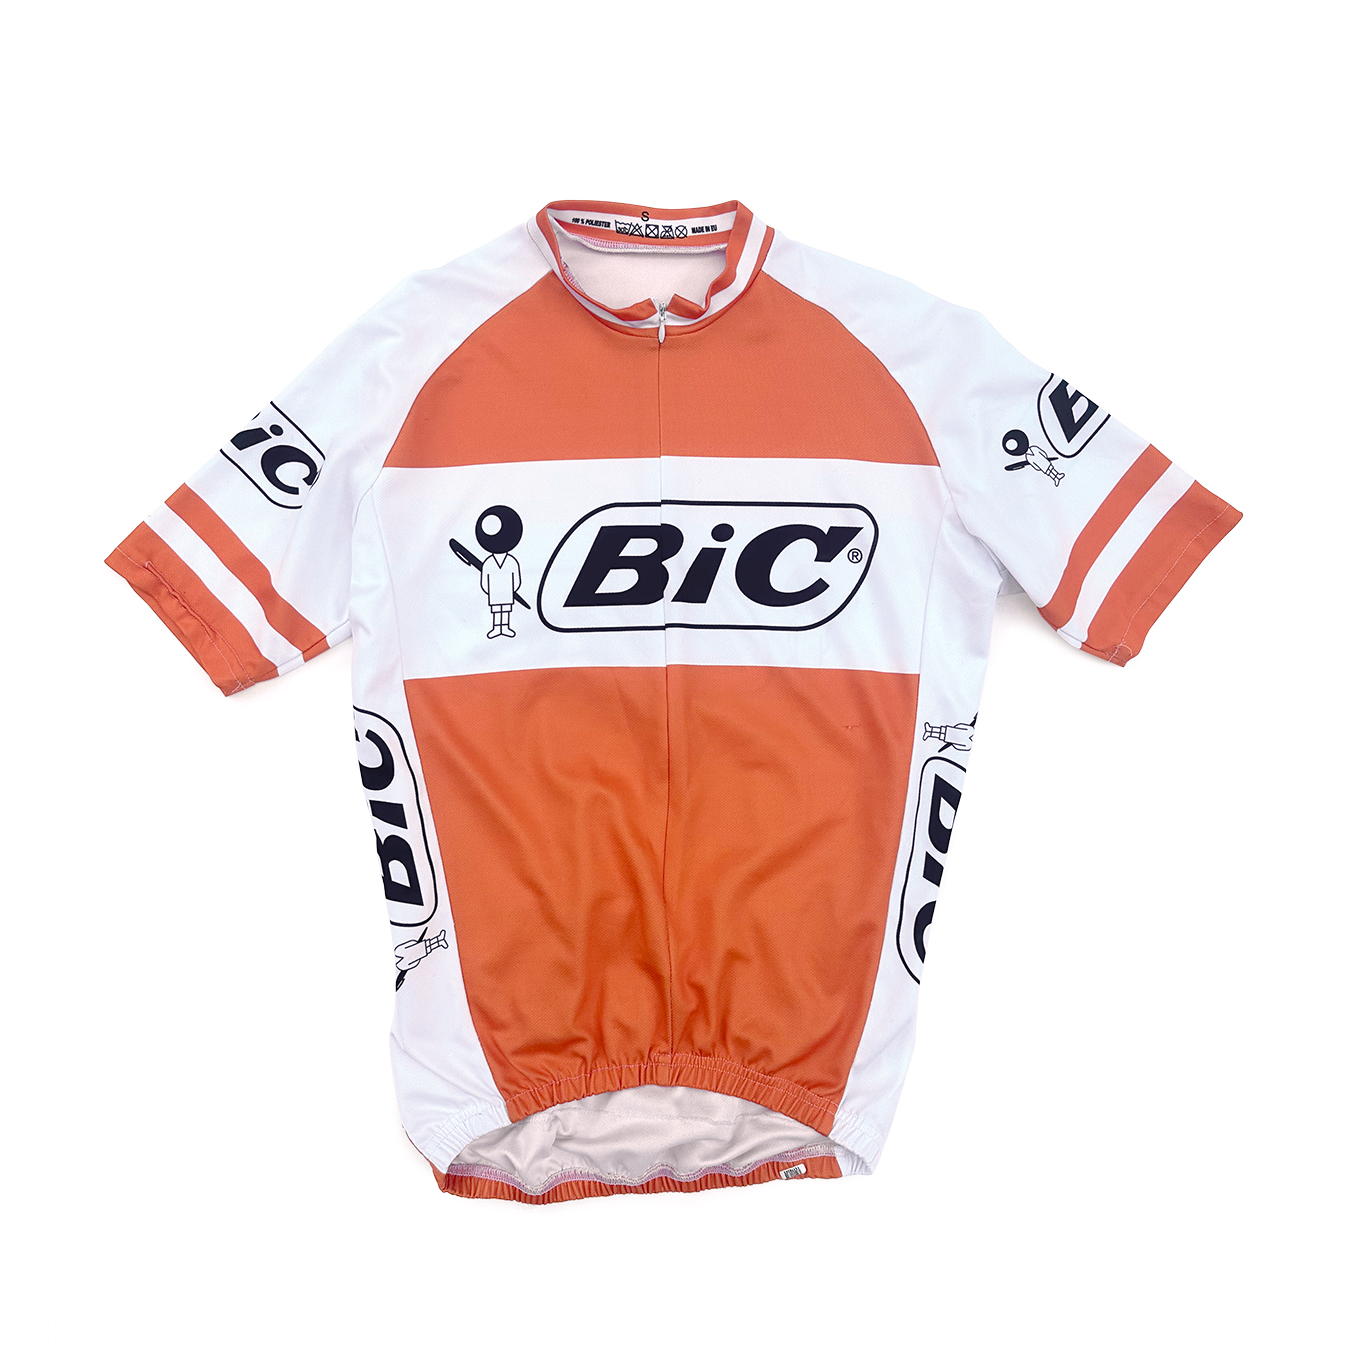 Bic Cycling Jersey (c. 2000s)